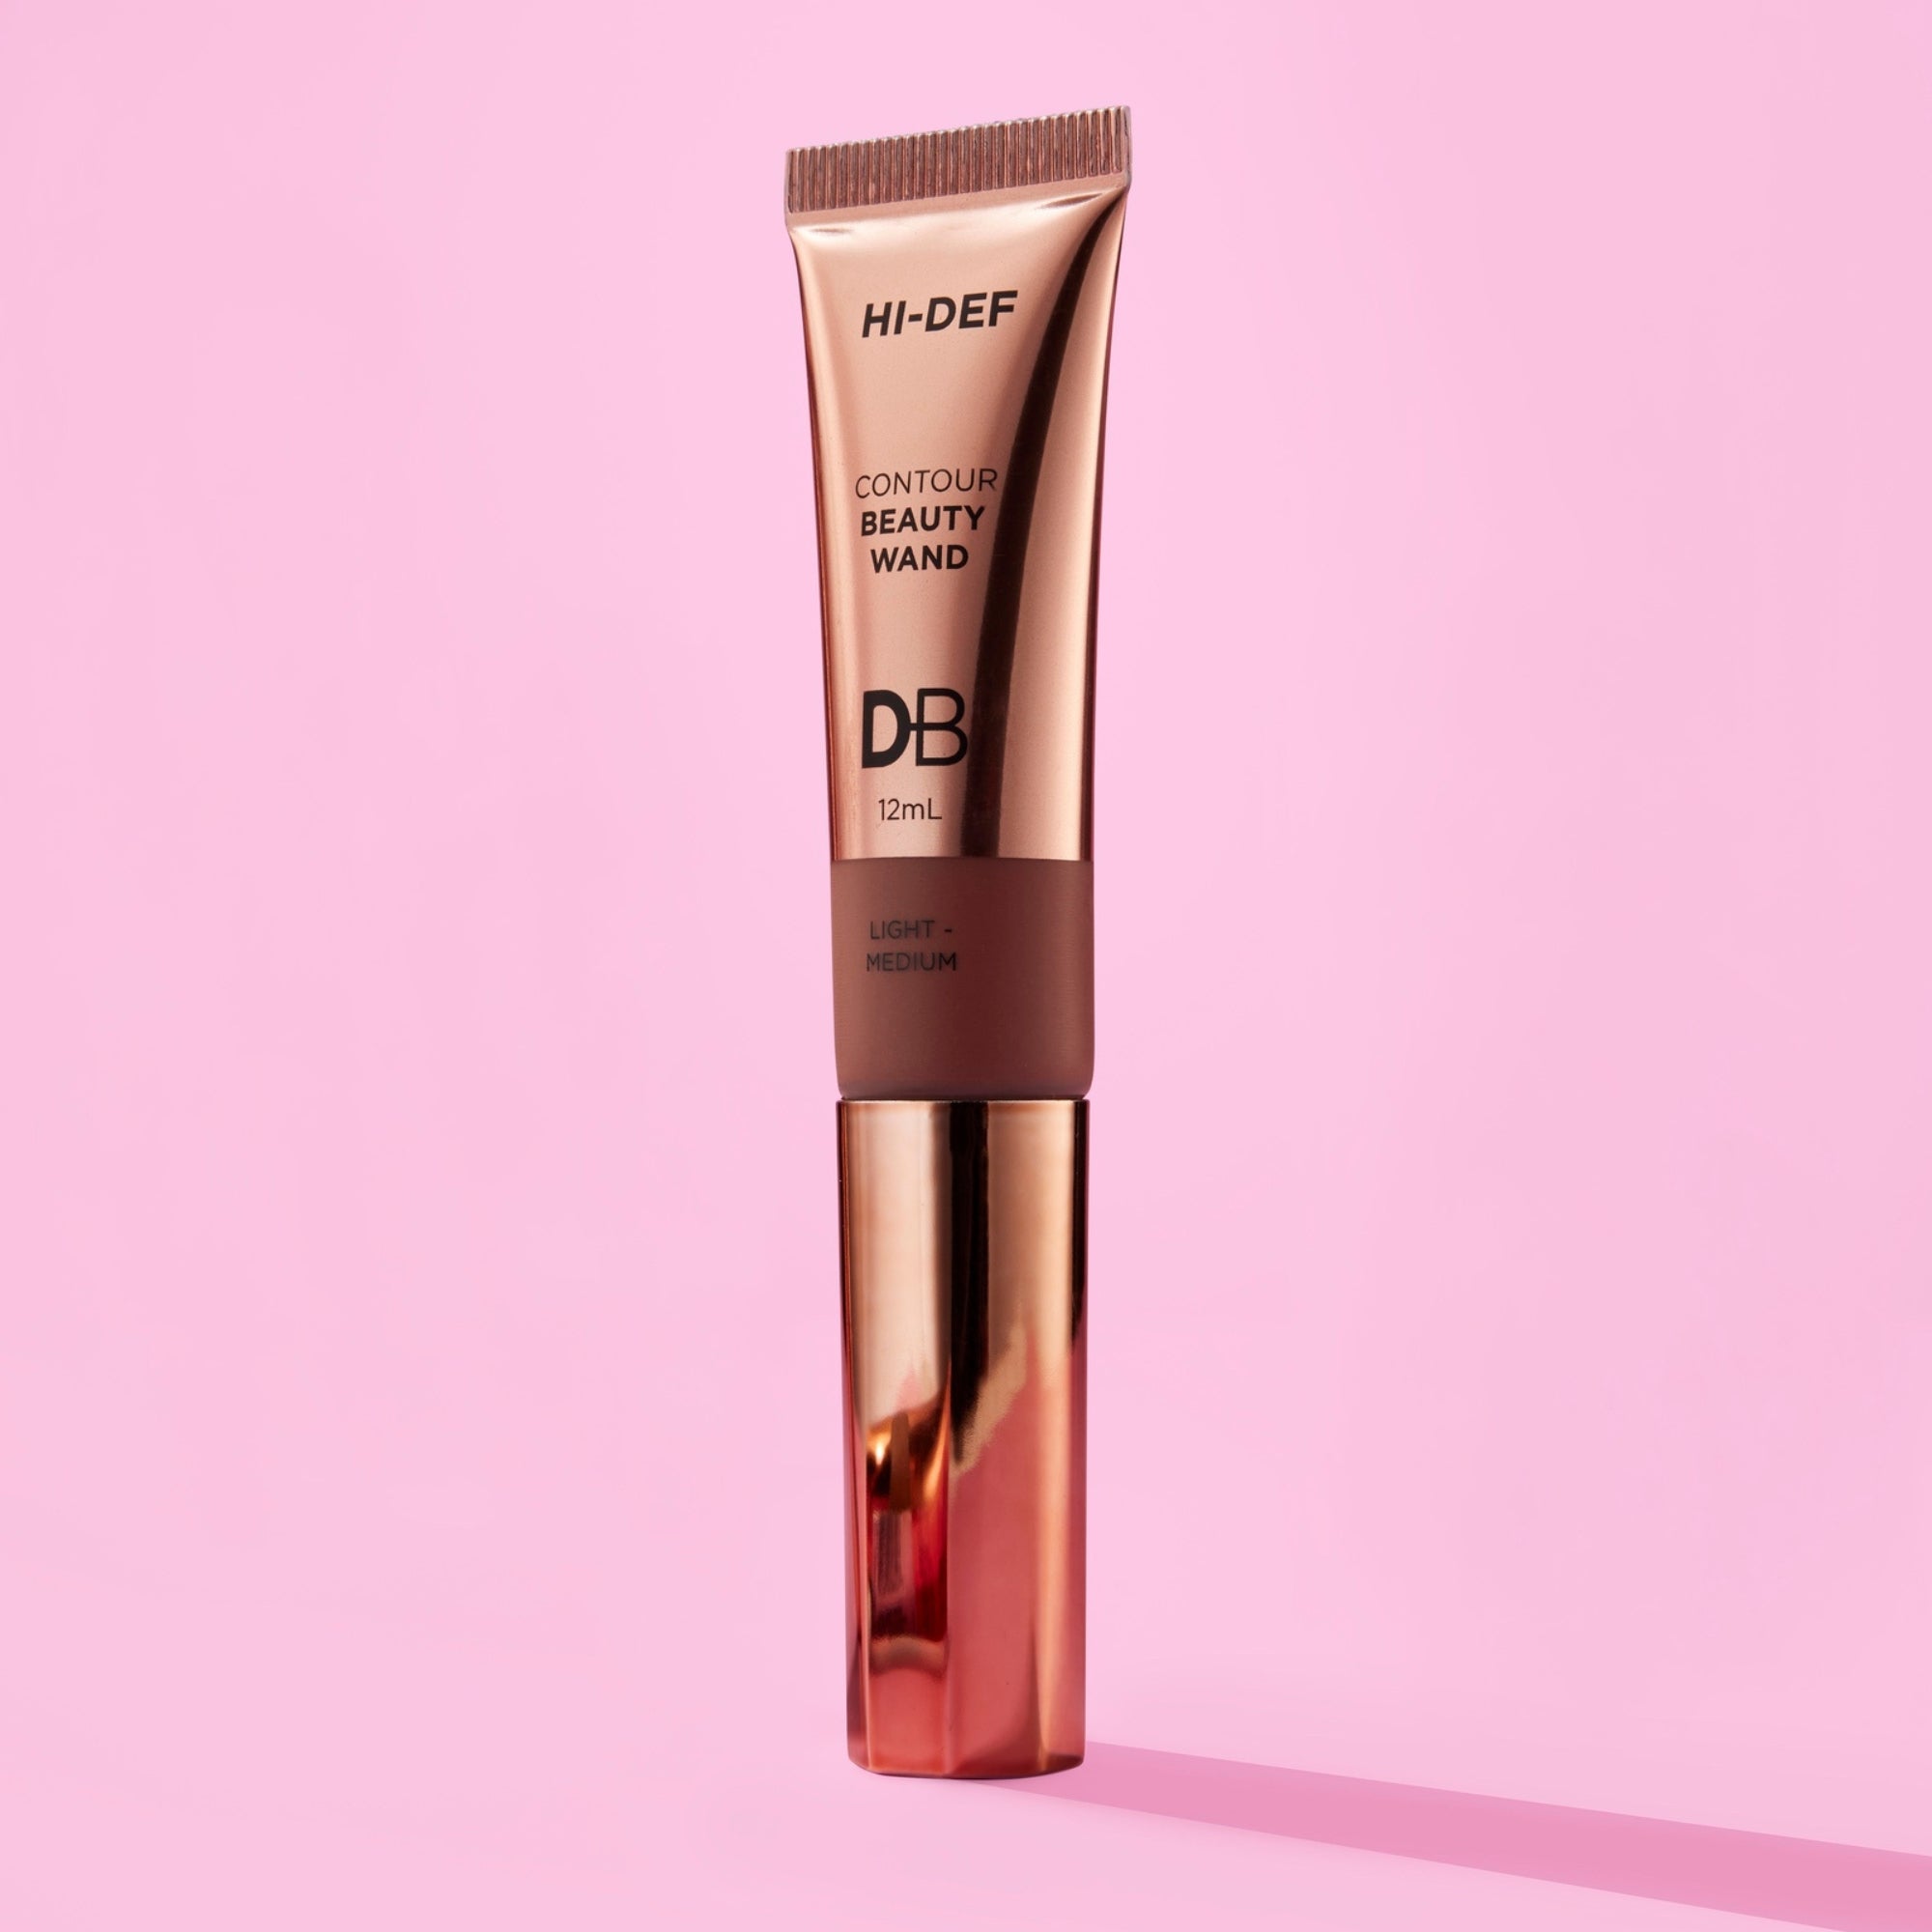 Hi-Def Contour Beauty Wand | DB Cosmetics | Lifestyle | Product